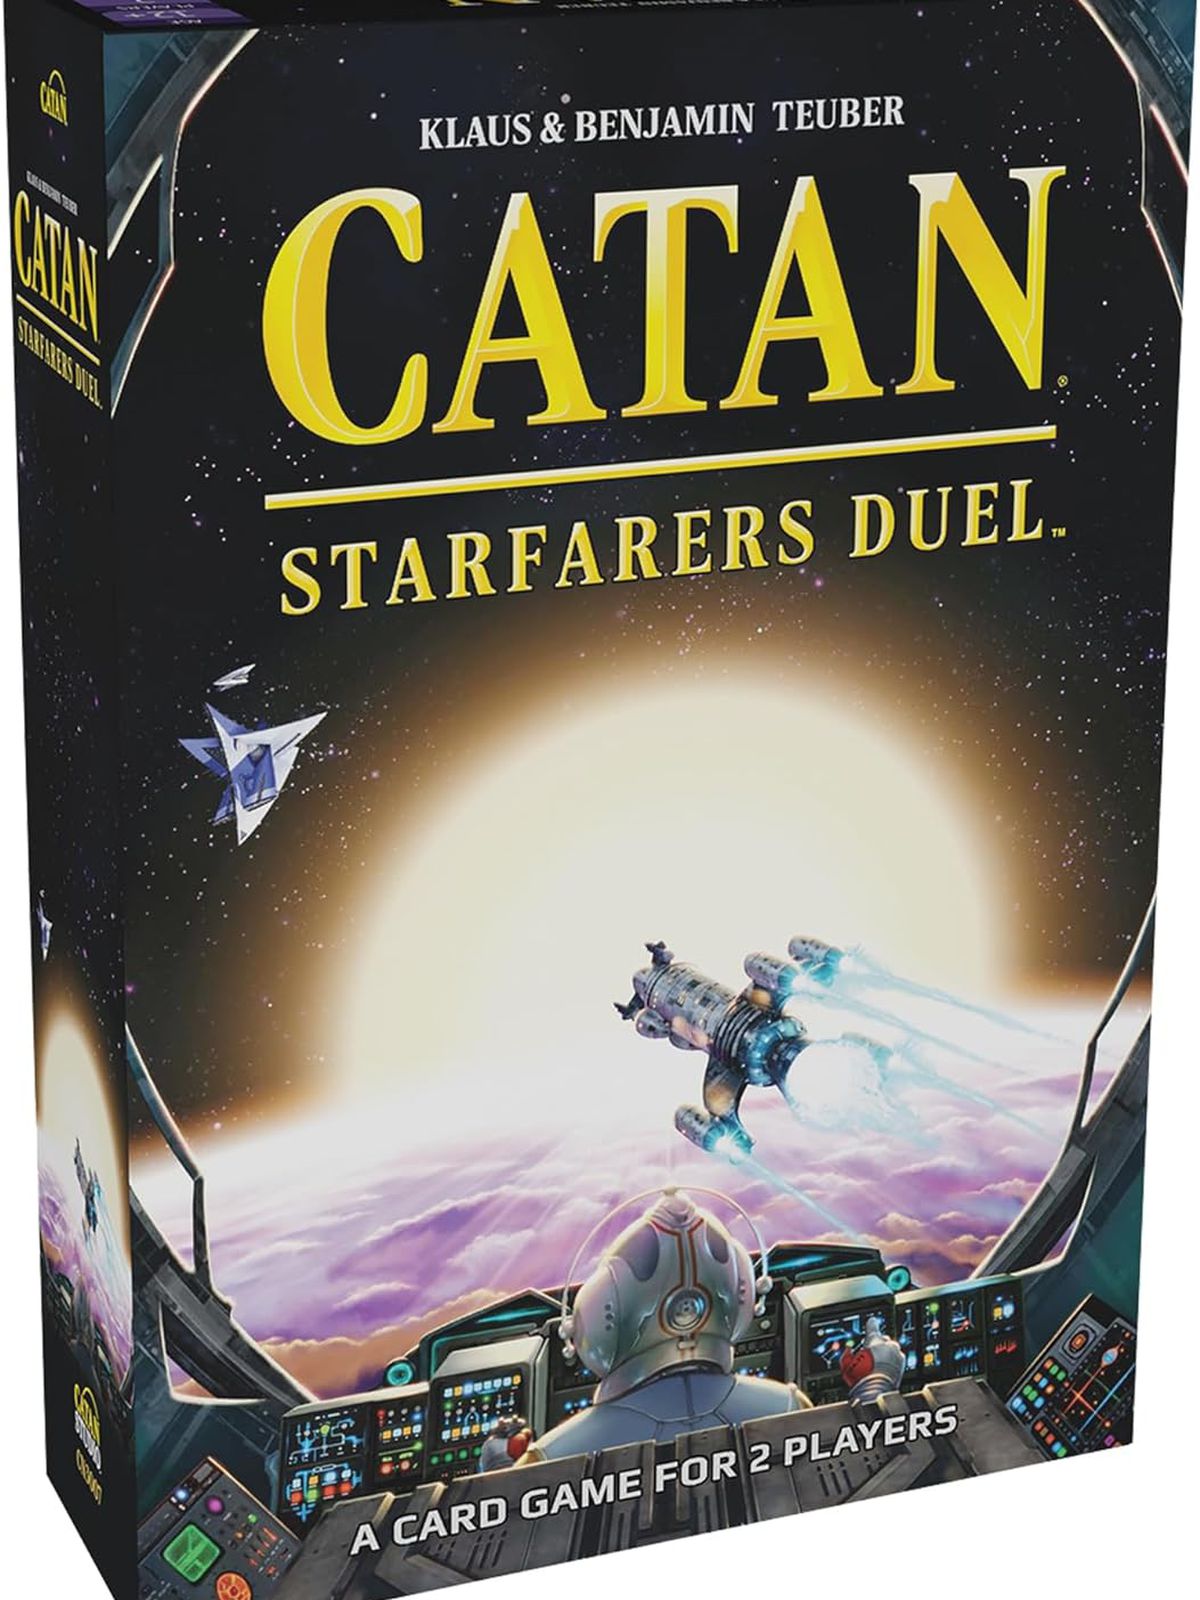 La boîte du jeu de cartes Catan Starfarers Duel